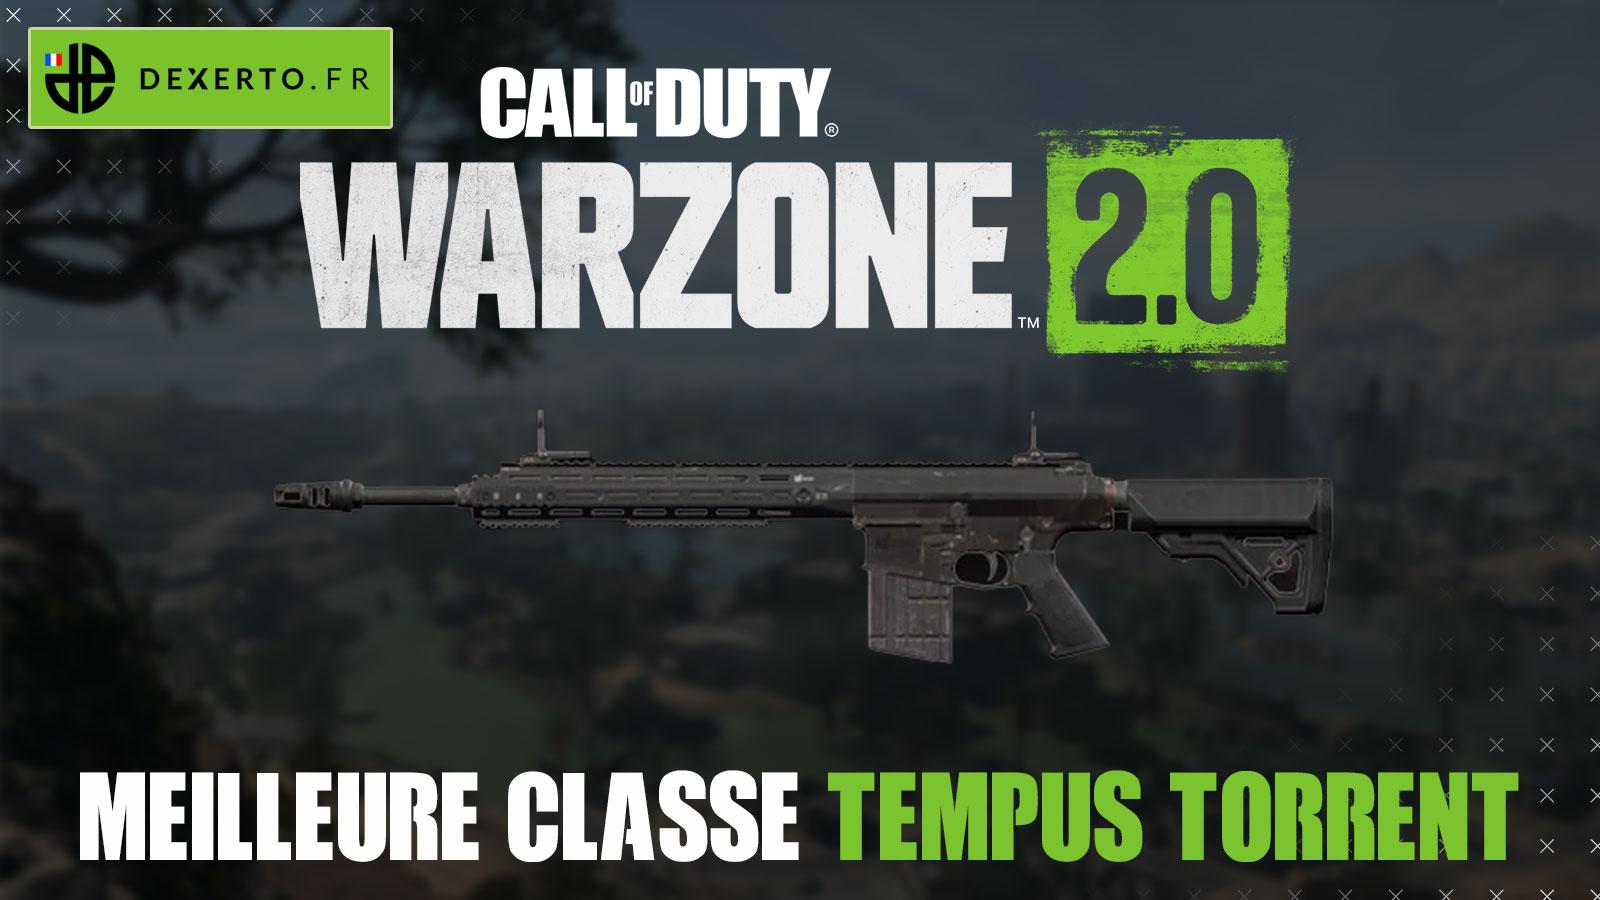 Tempus Torrent Meilleure classe Warzone 2